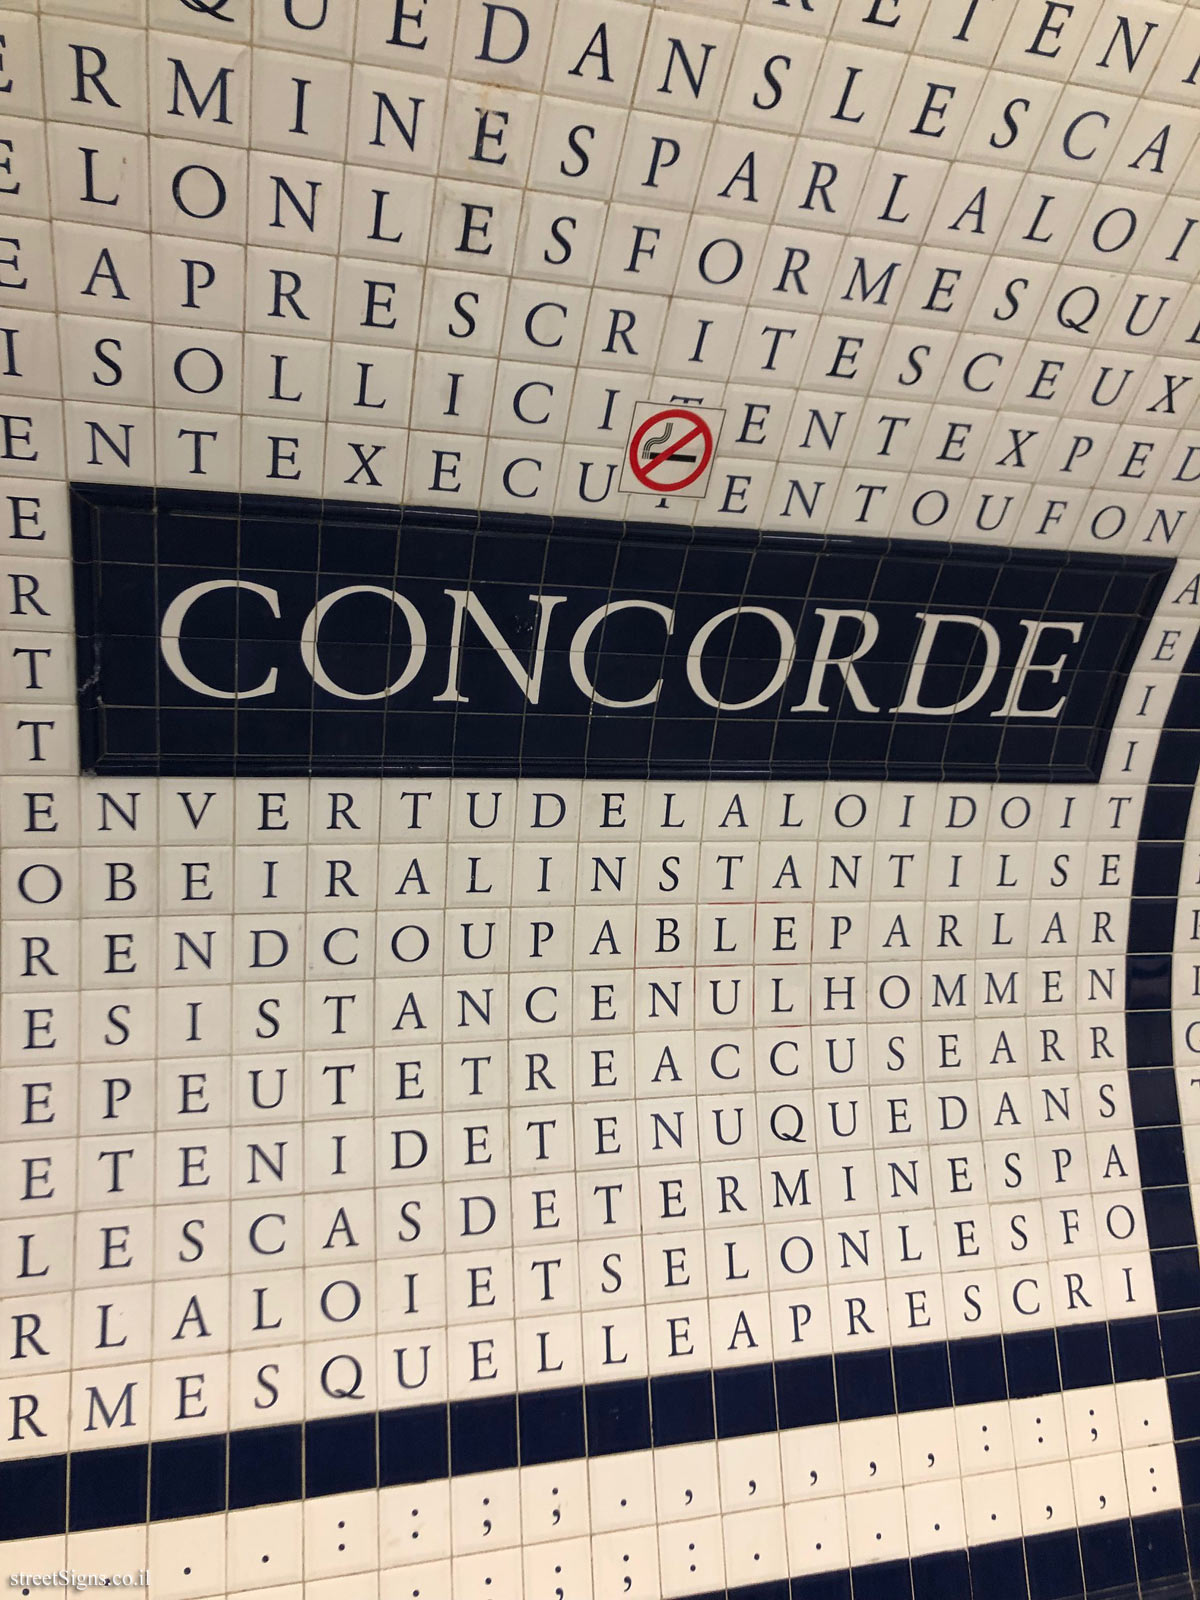 Paris - Concorde Metro Station - interior of the station